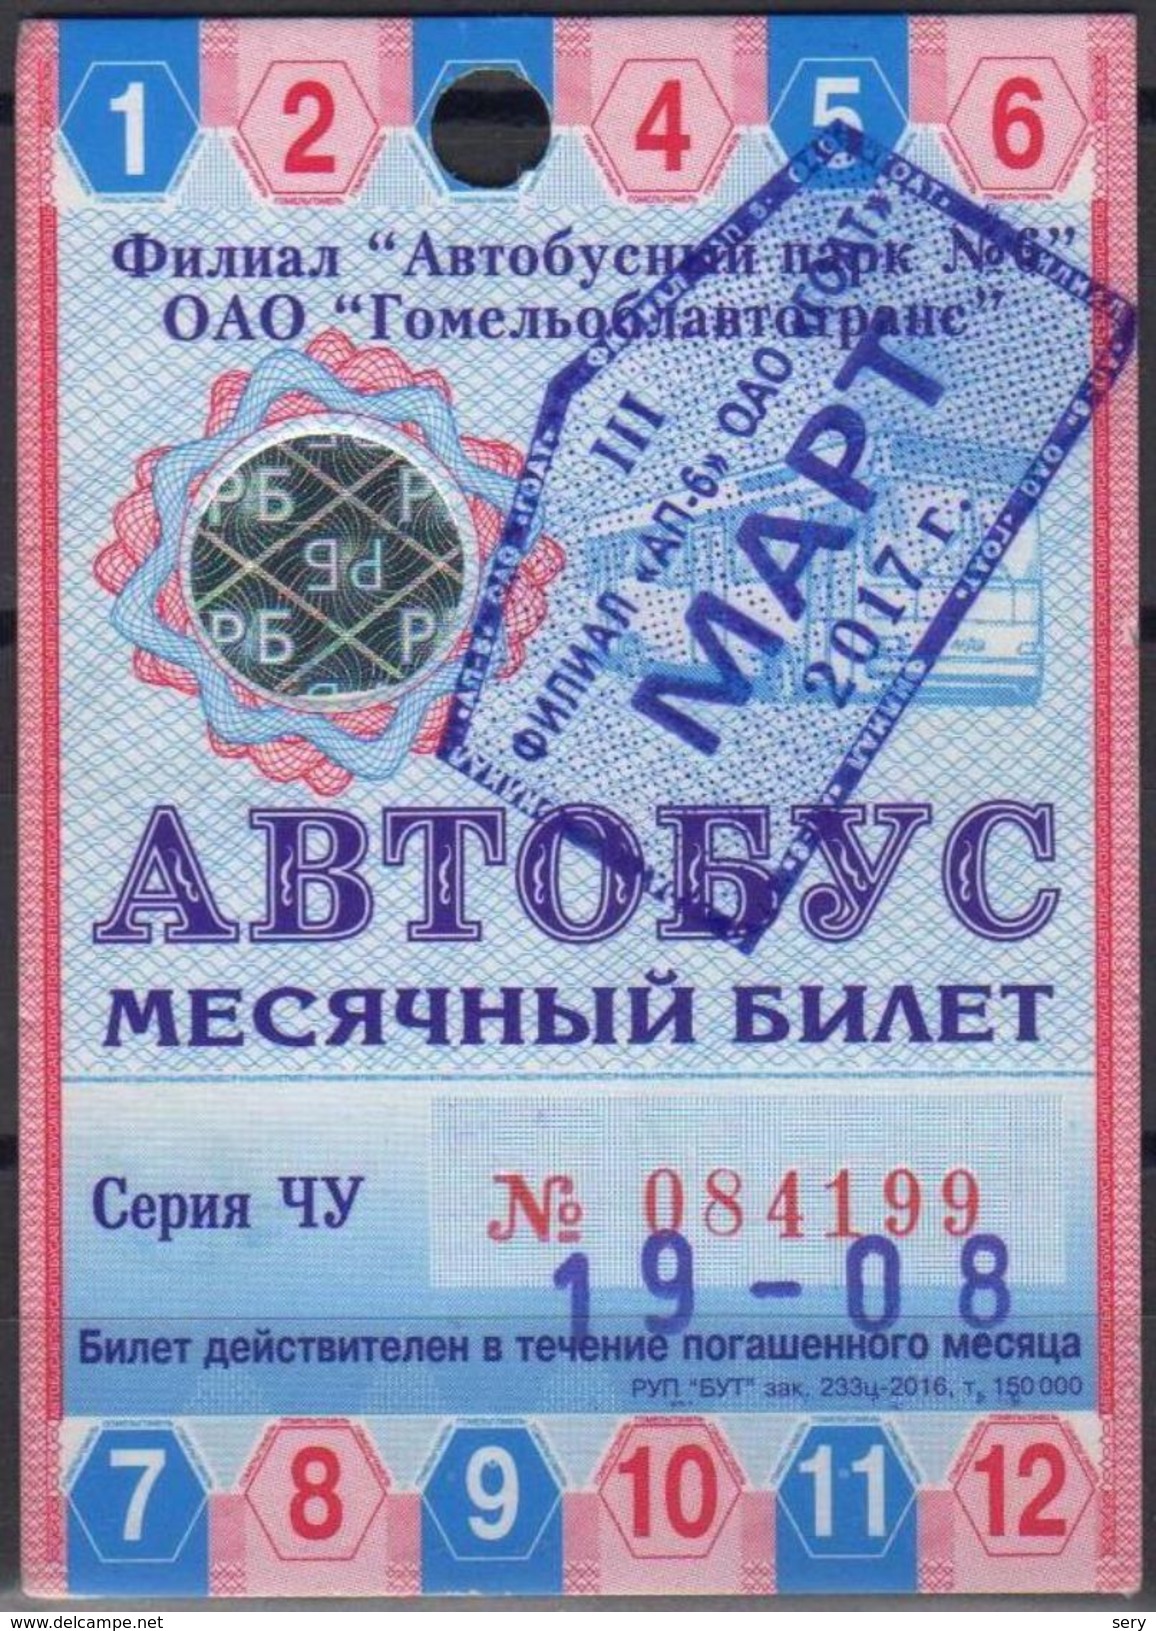 Belarus 2017 Gomel  Bus Ticket - Europe